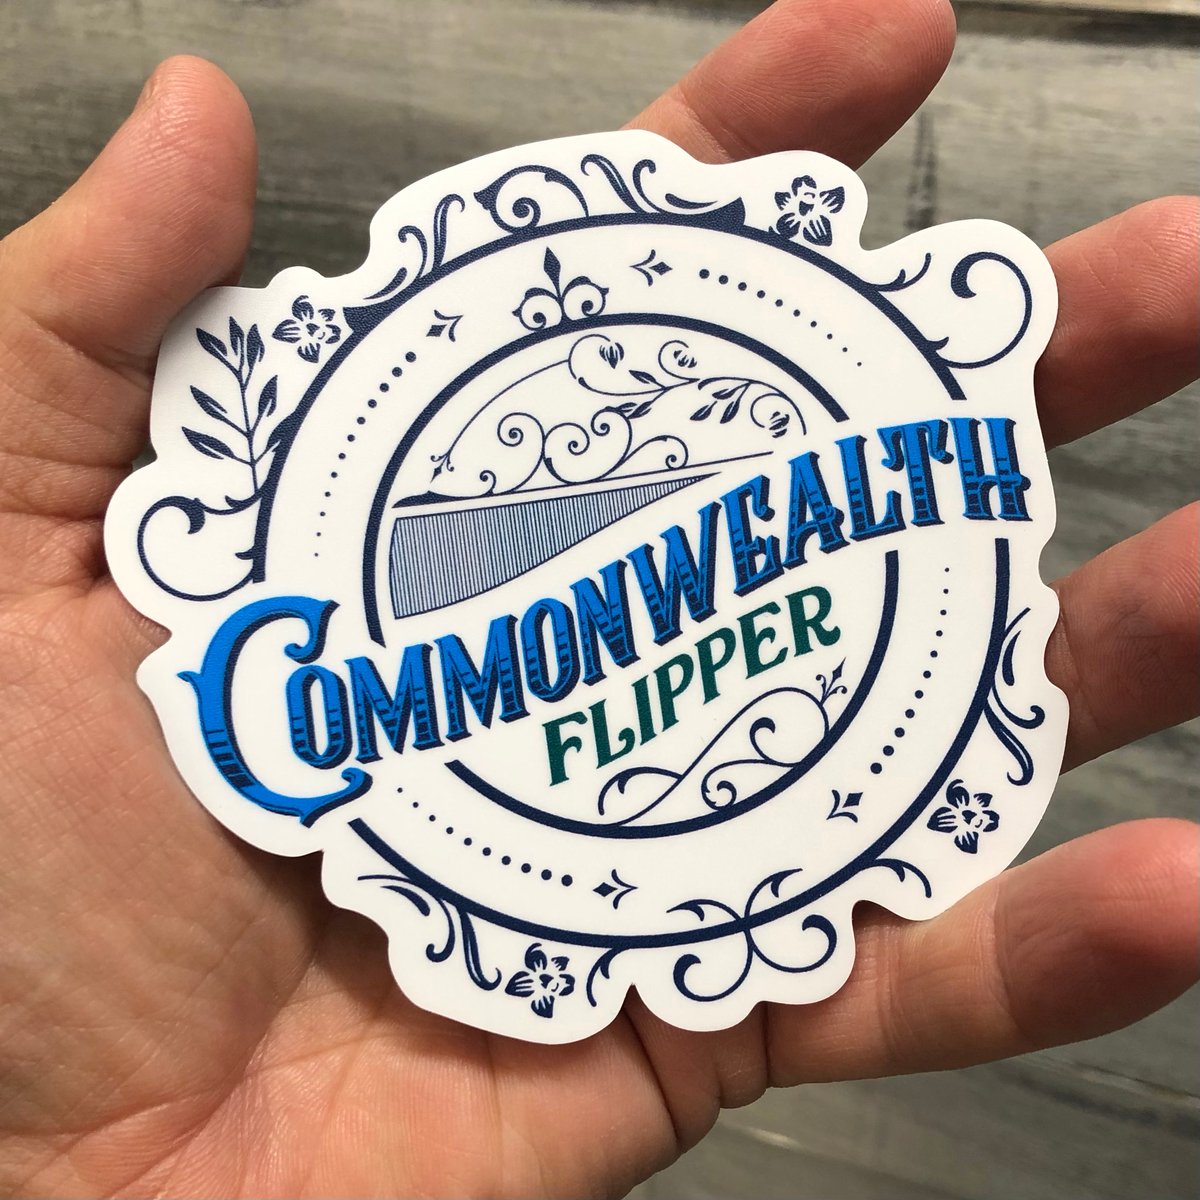 Commonwealth Flipper Sticker